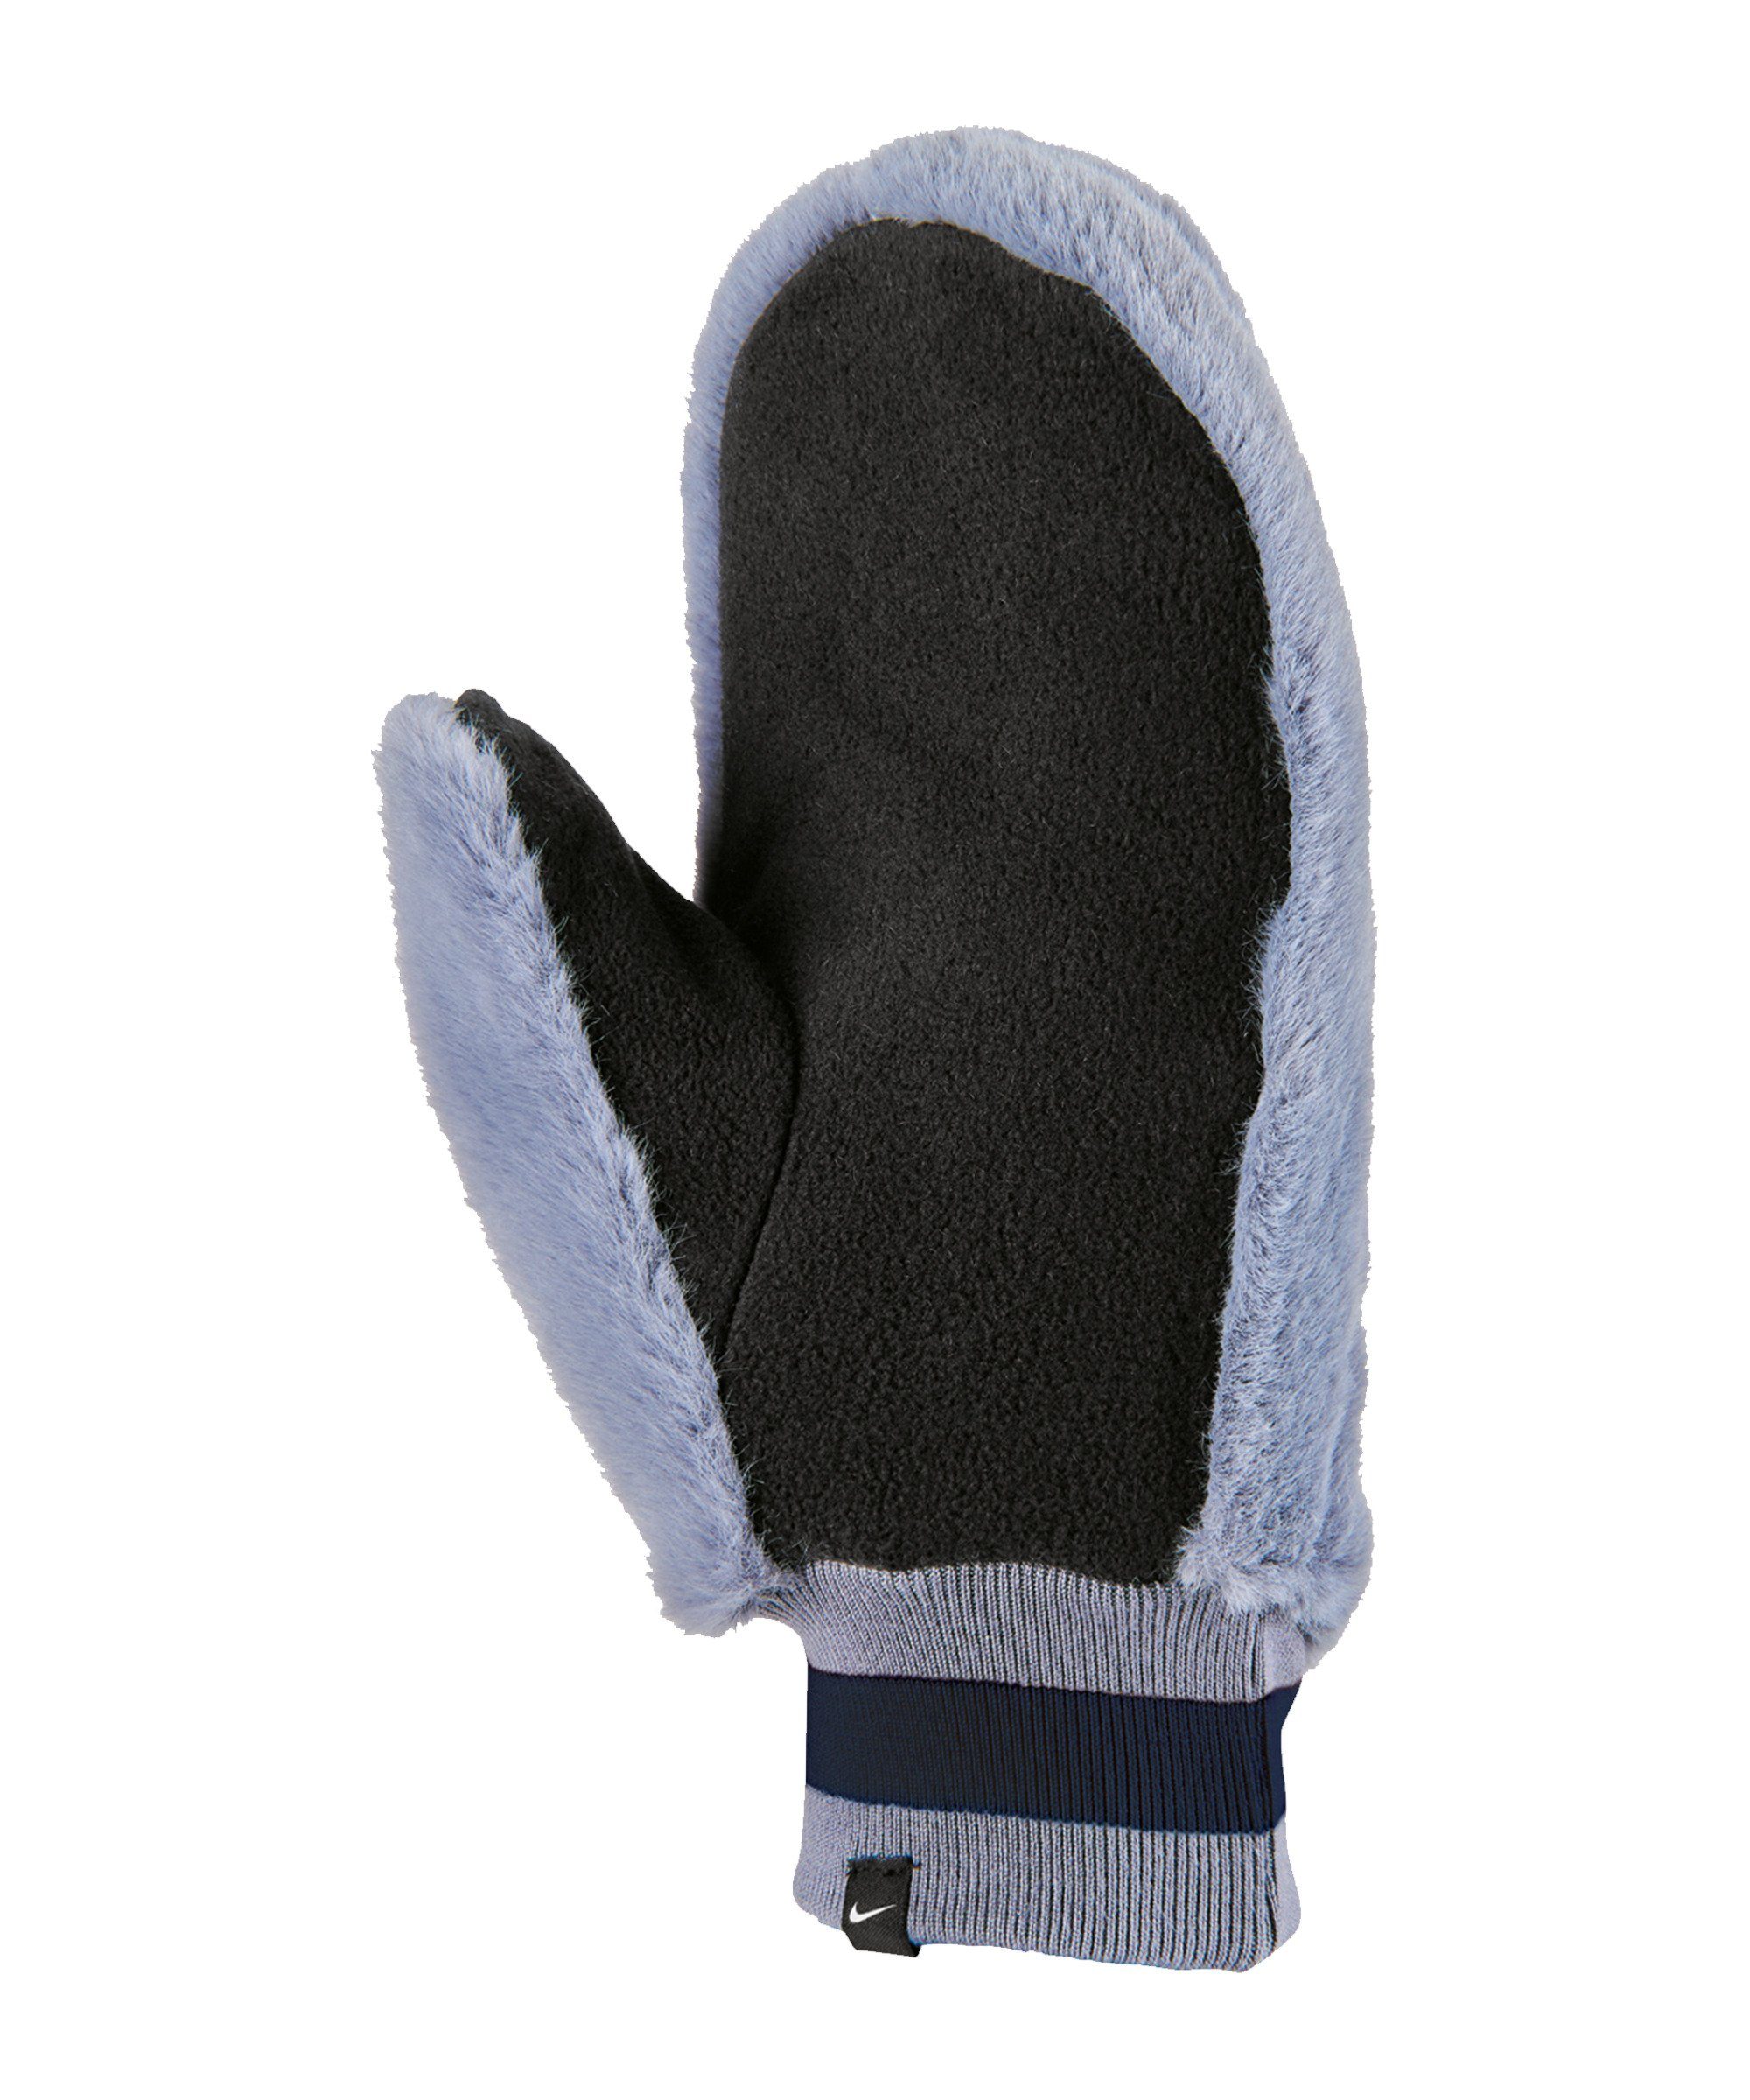 Handschuhe Mittens Warm Nike Feldspielerhandschuhe lilaschwarz